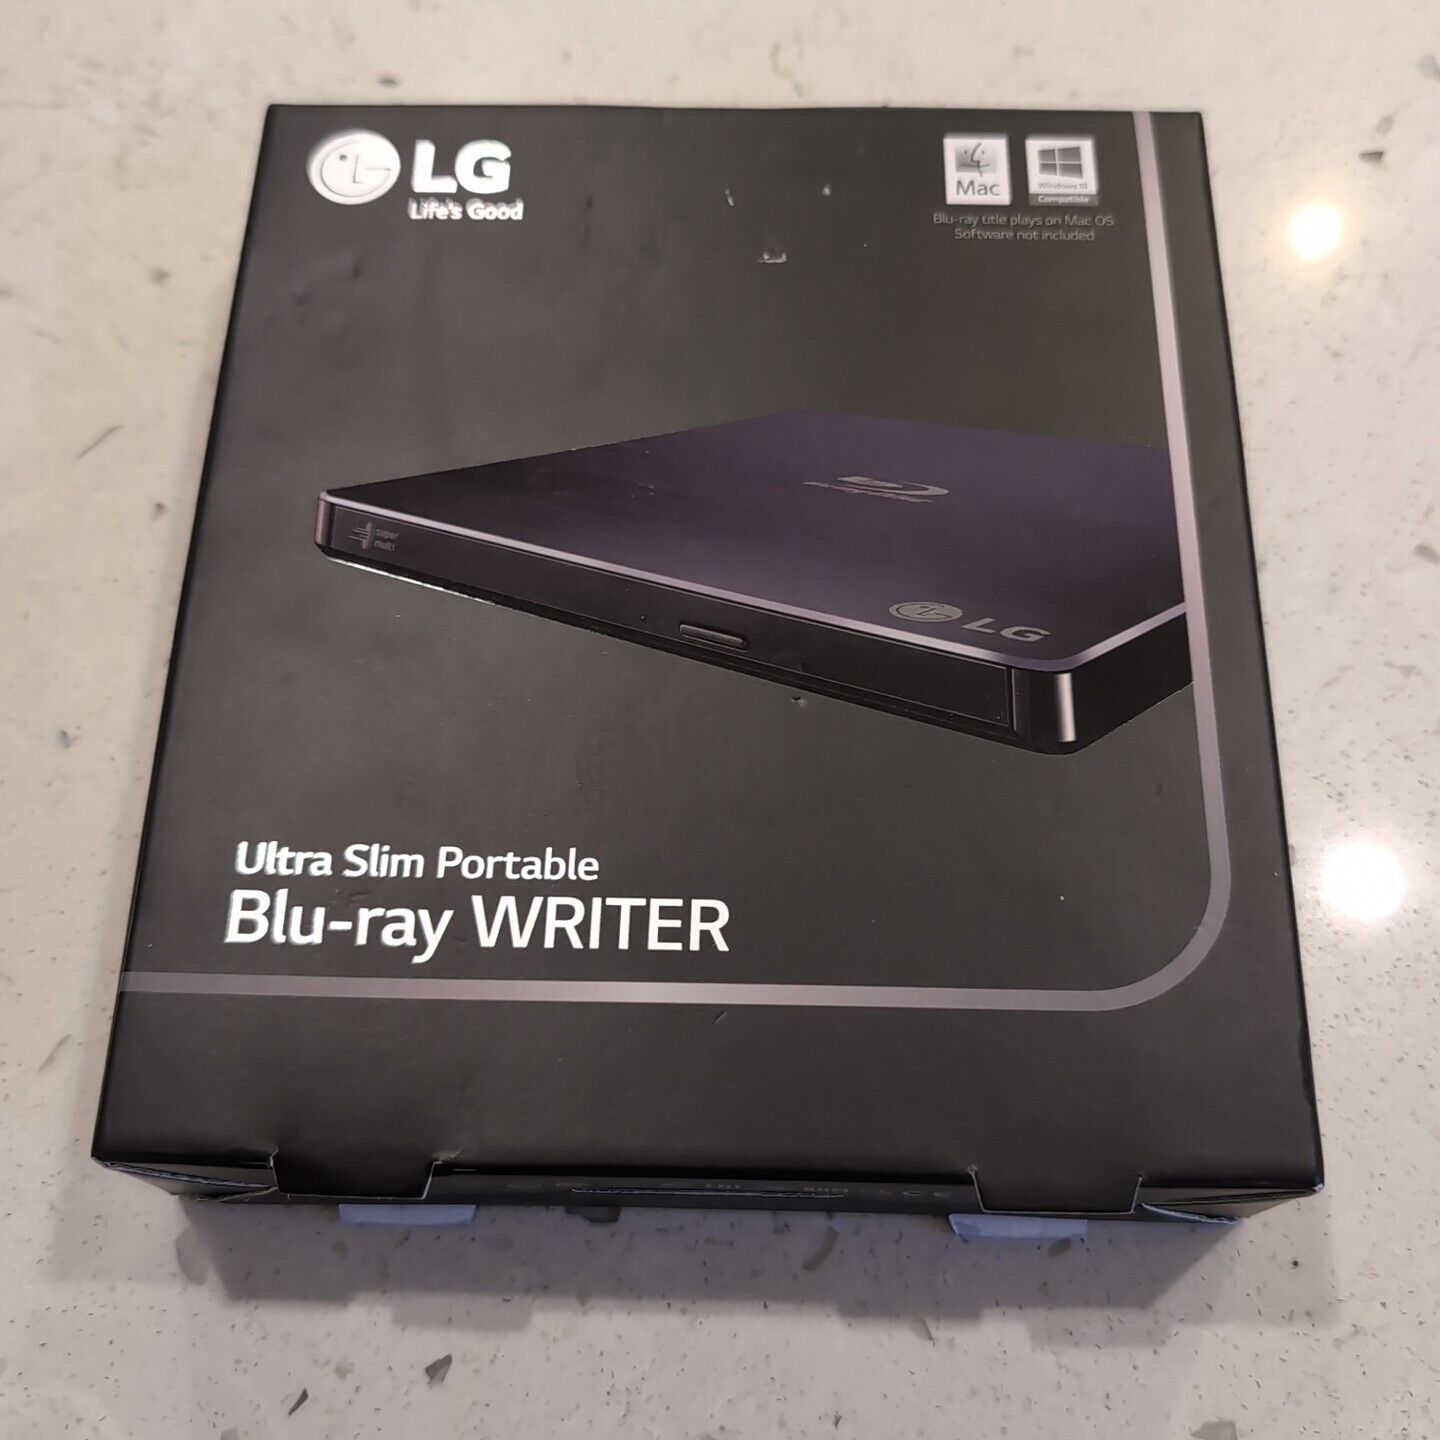 LG BP50NB40 External DVD Drive - Blue-ray Writer New Open Box See Pics